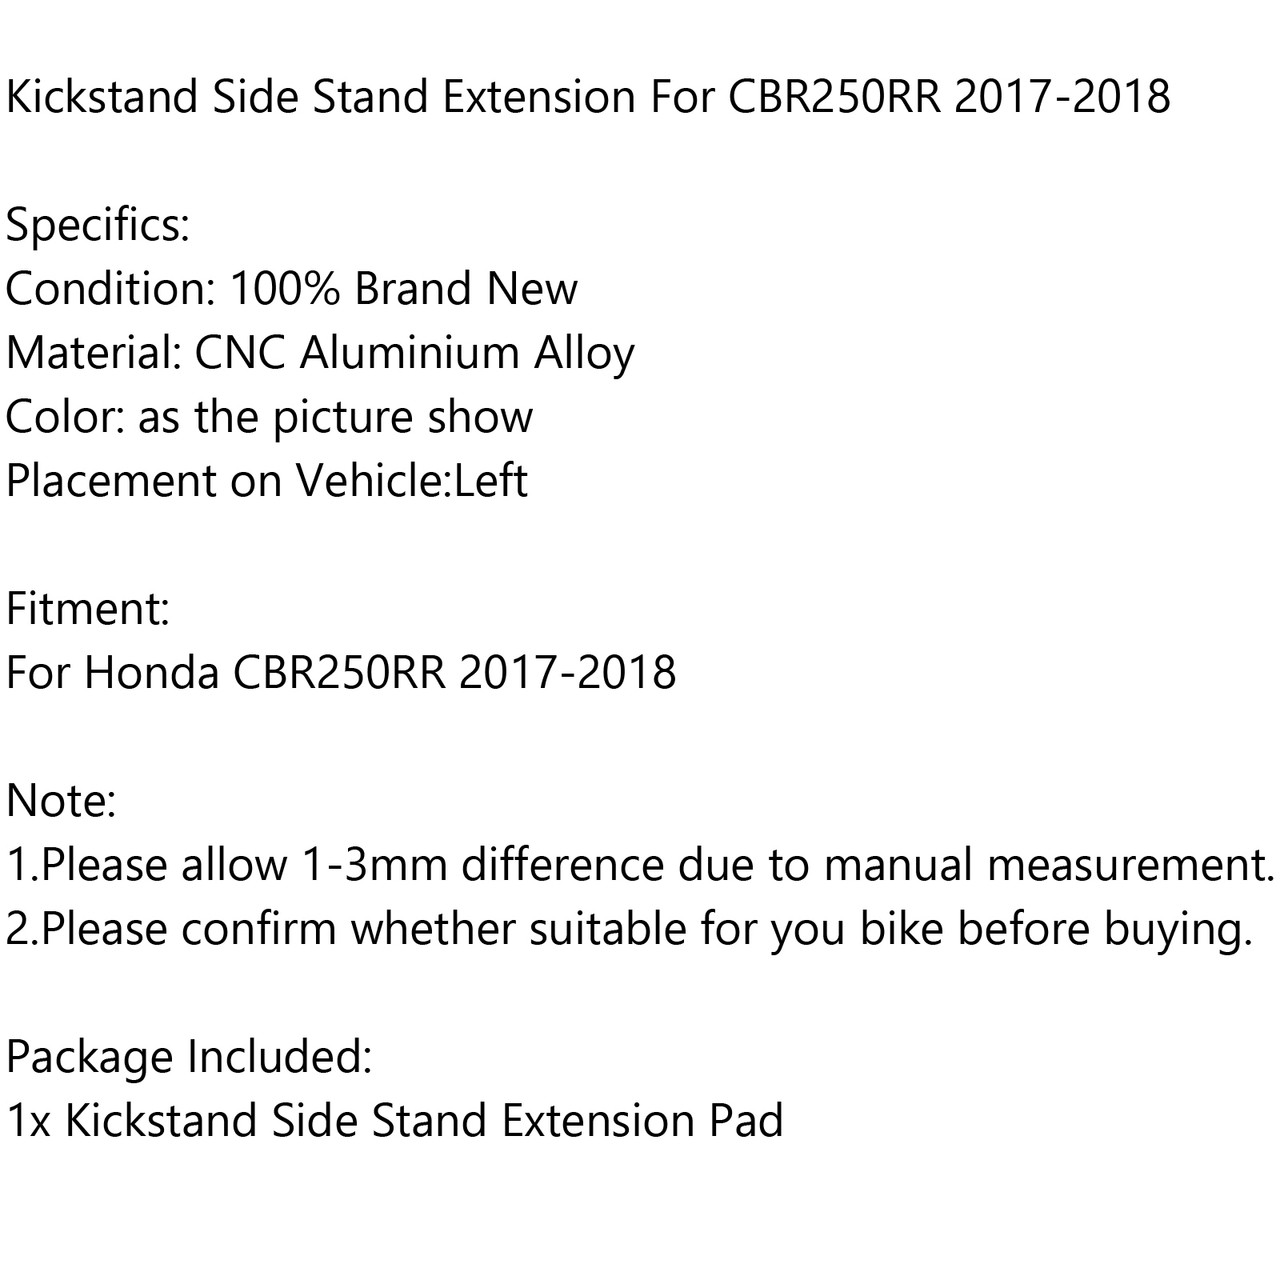 Kickstand Side Stand Extension Enlarger Pad For Honda CBR250RR 17-18 Blue